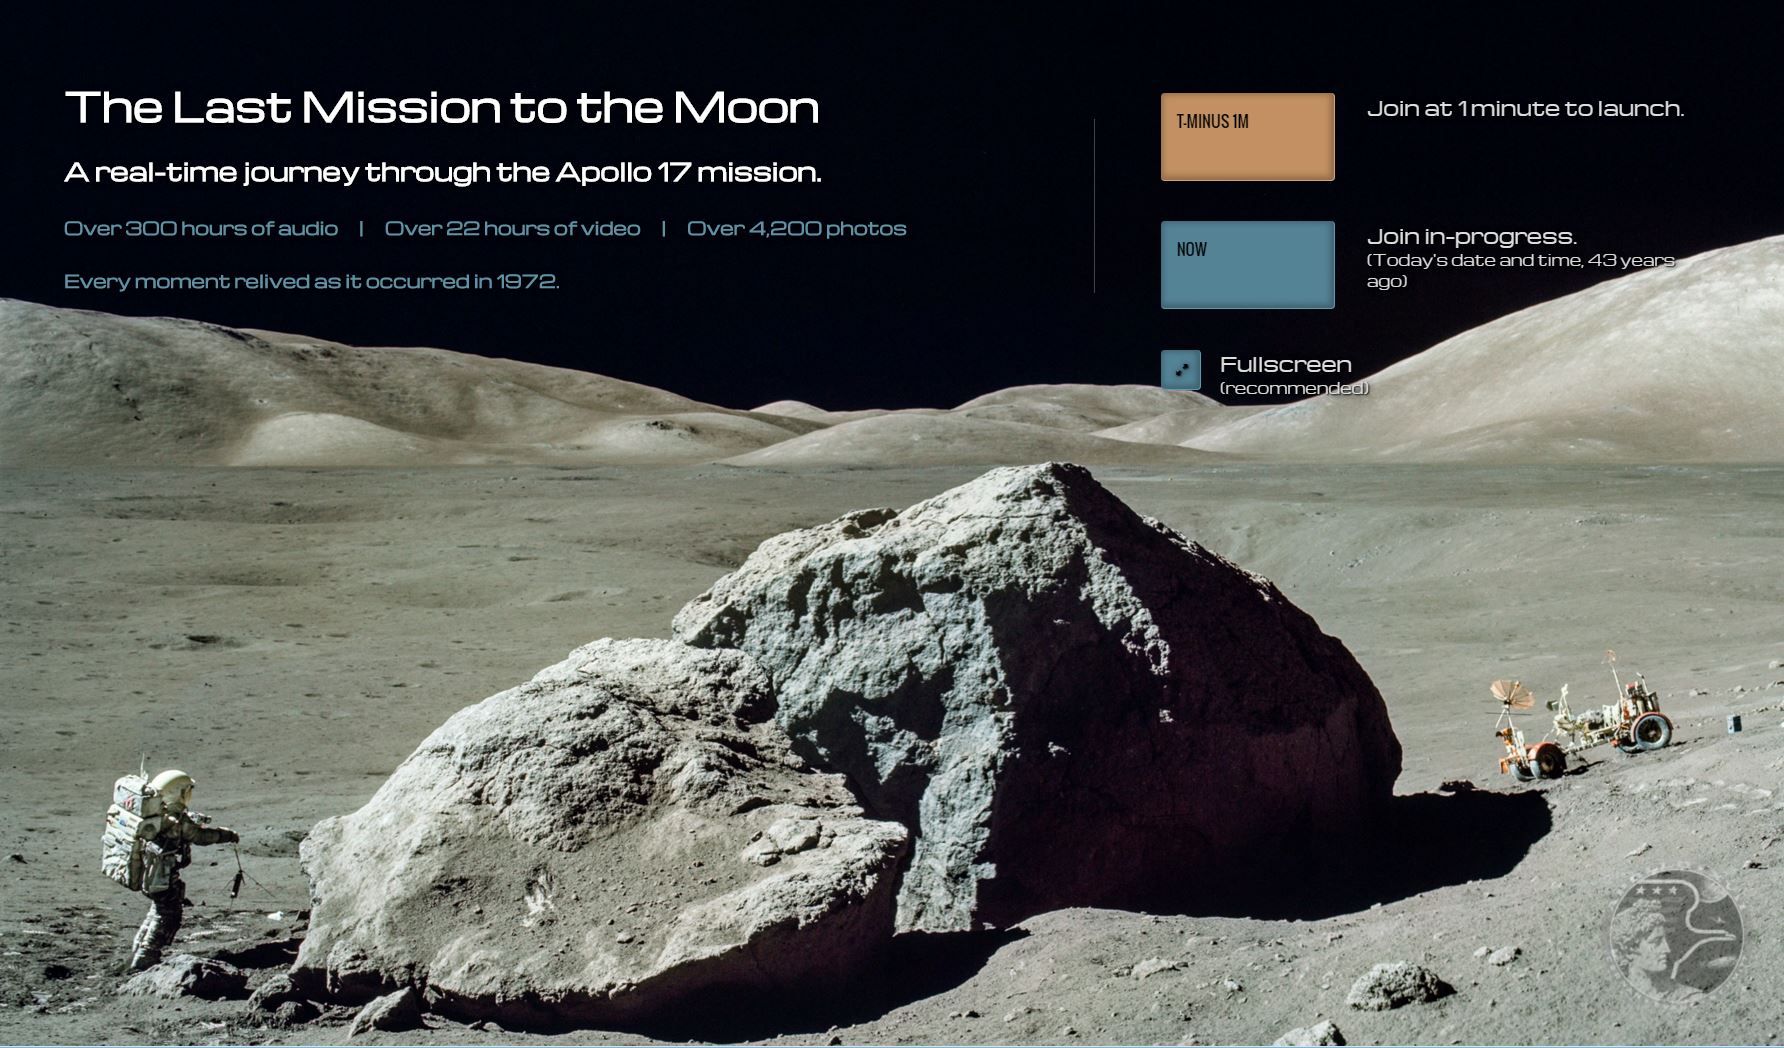 ÎÏÎ¿ÏÎ­Î»ÎµÏÎ¼Î± ÎµÎ¹ÎºÏÎ½Î±Ï Î³Î¹Î± Apollo 17